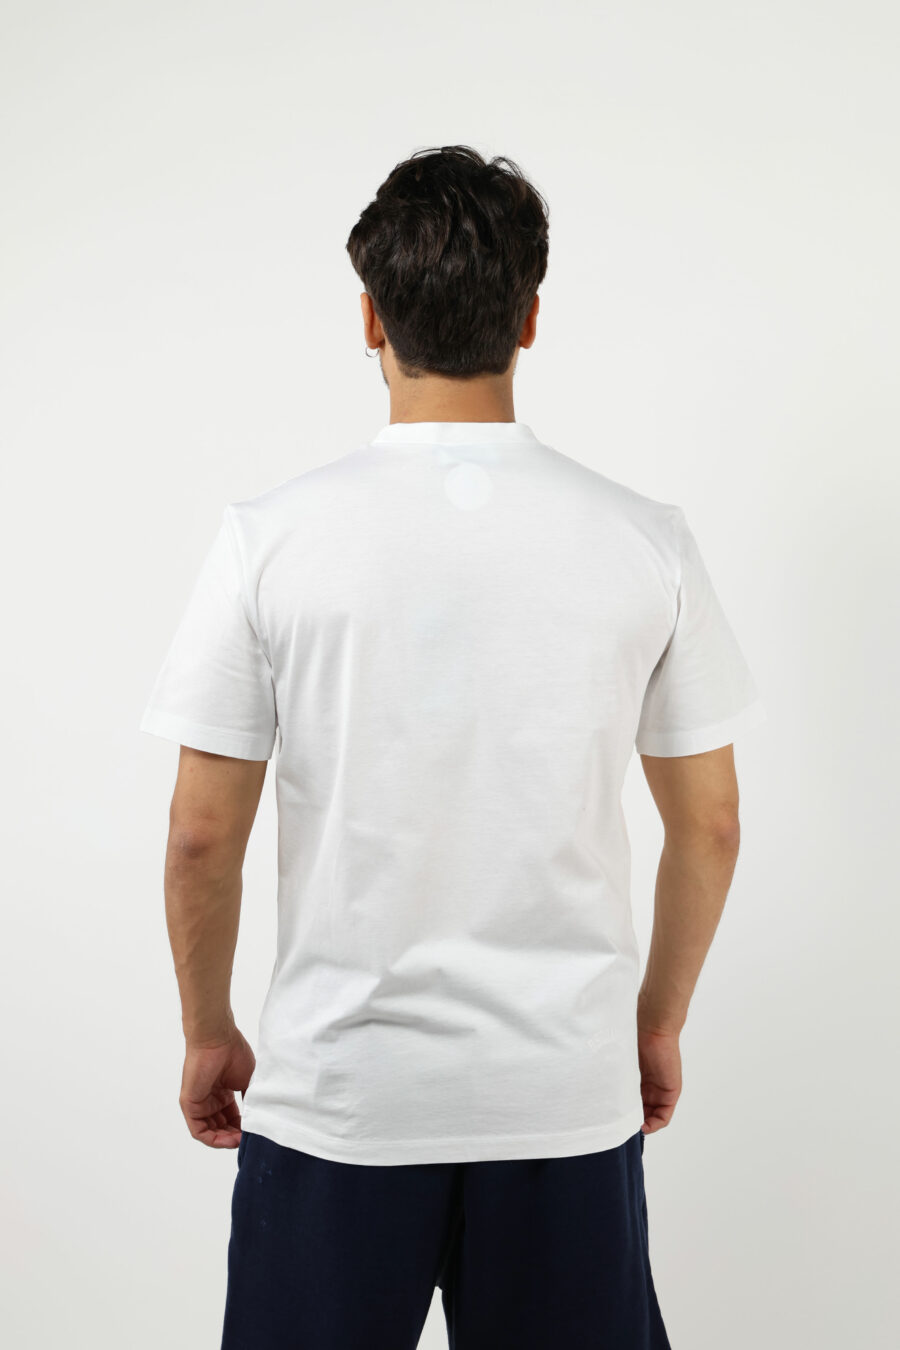 Camiseta blanca con maxilogo "gym" desgastado - 8054148265977 3